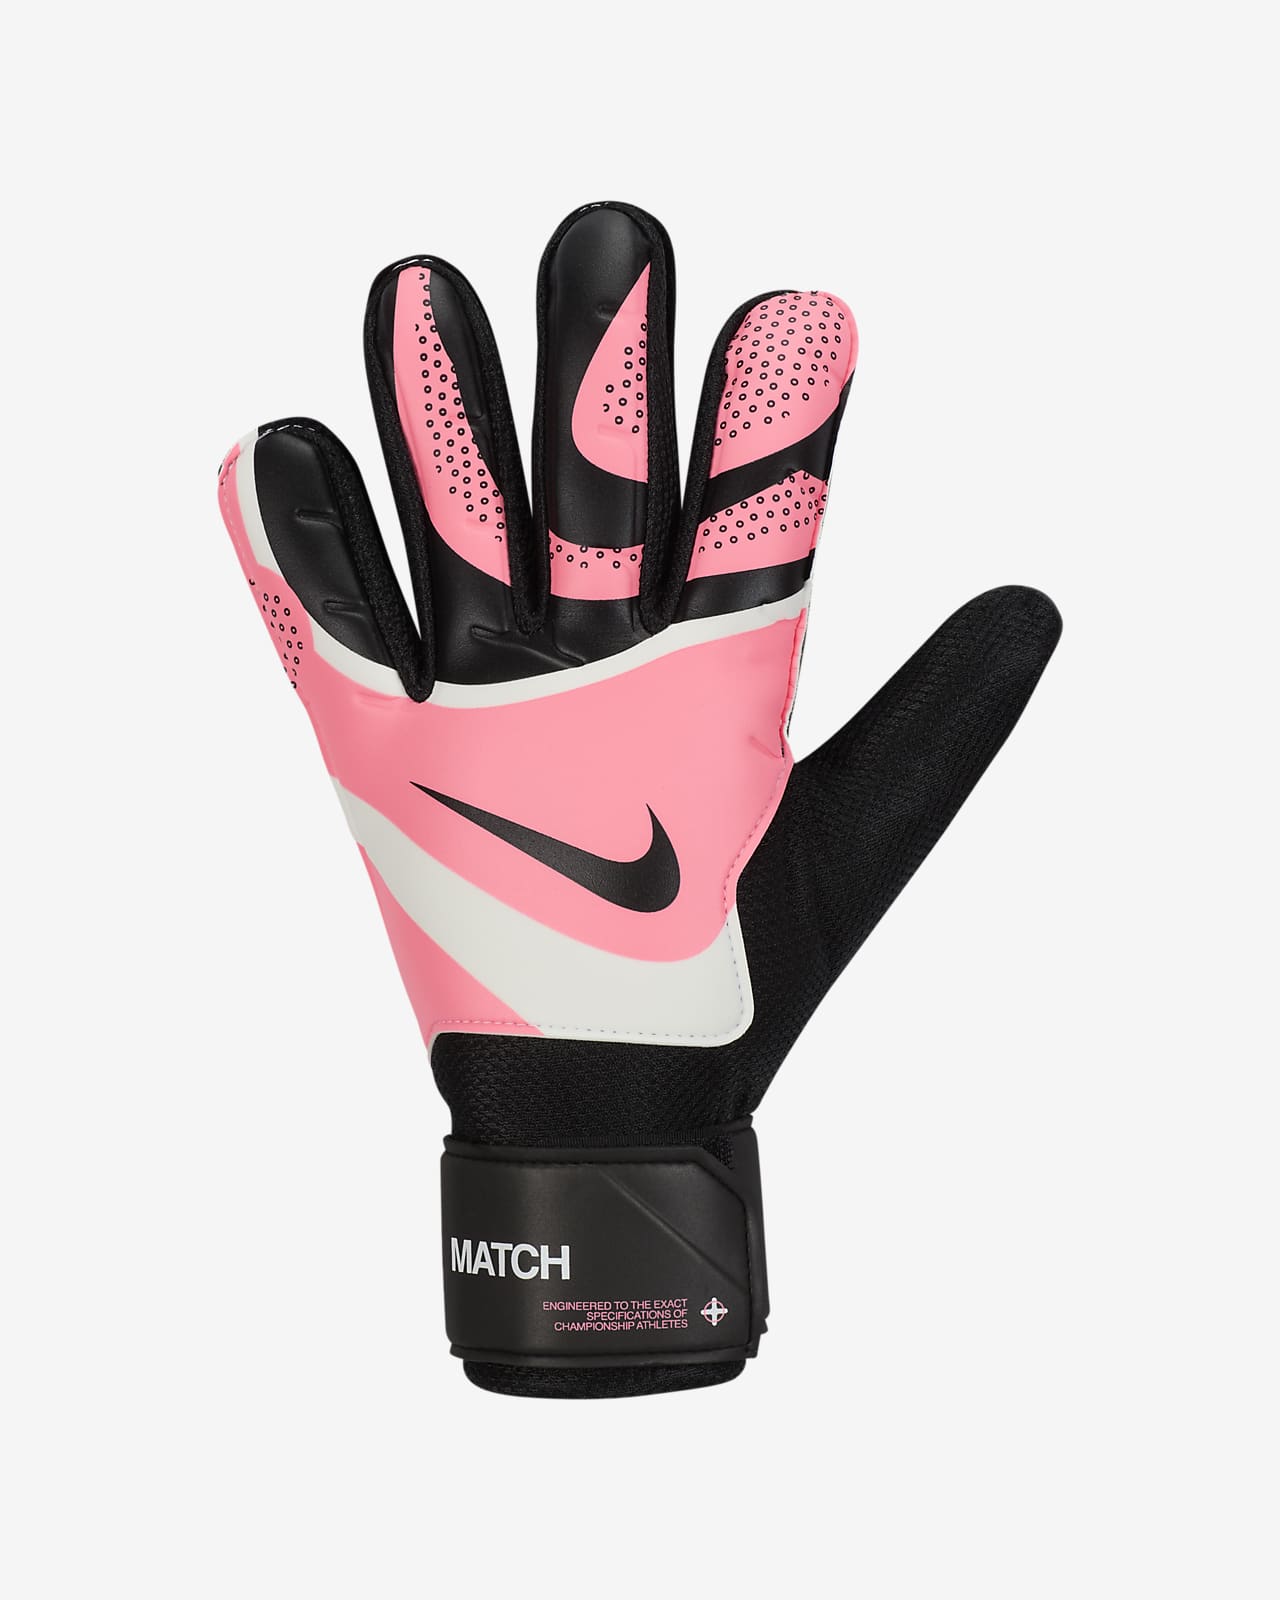 Nike Match Jr. Goal Keeper Gloves